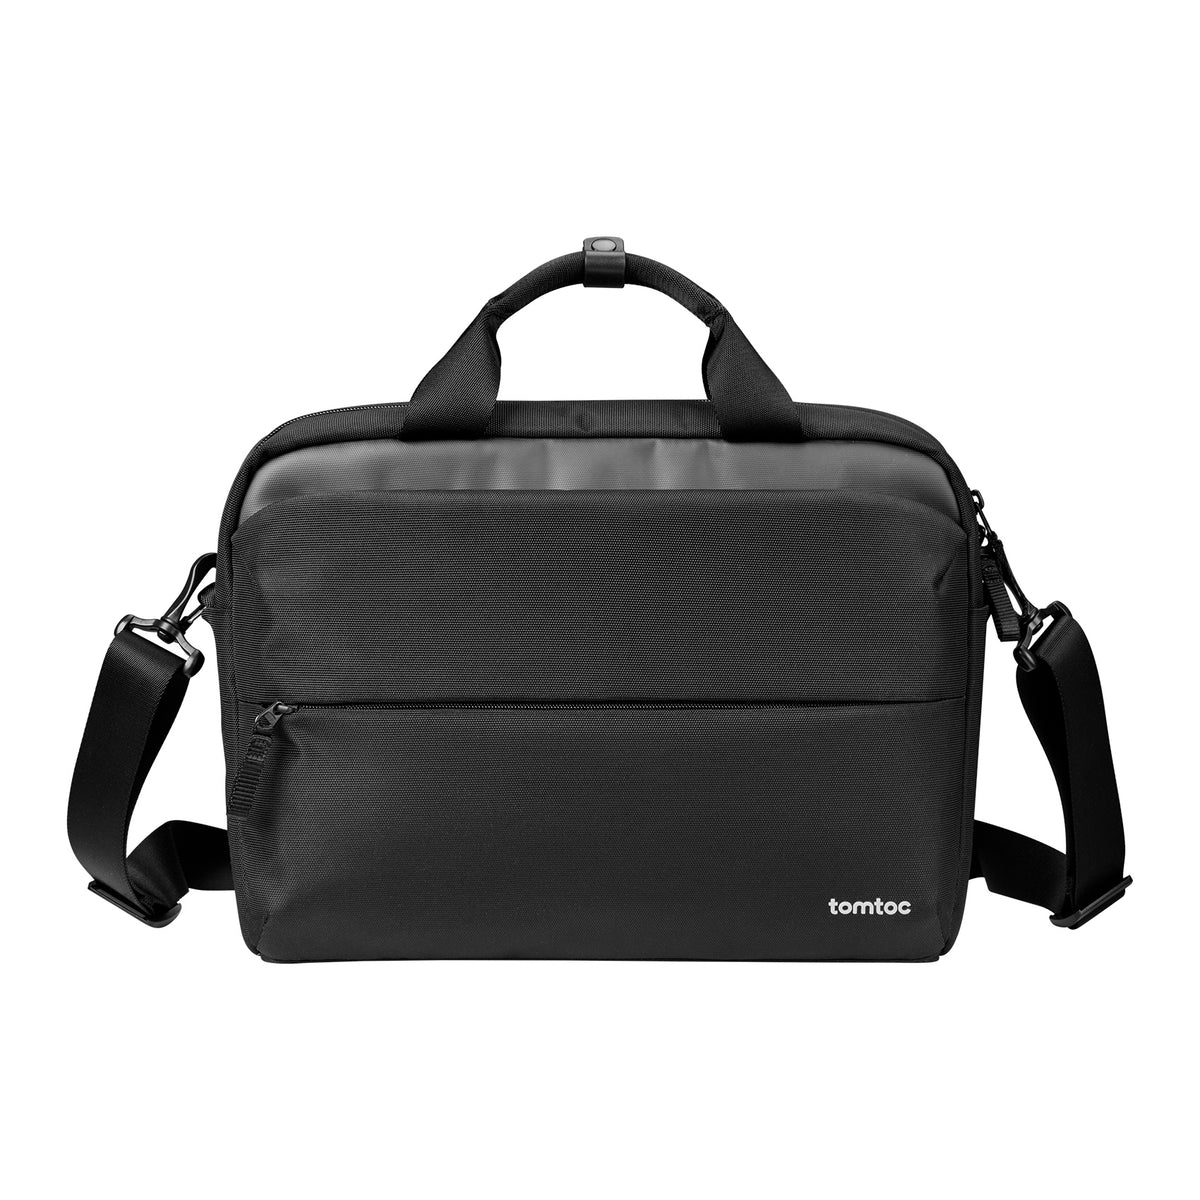 tomtoc 16 Inch Navigator Business Laptop Briefcase - Black